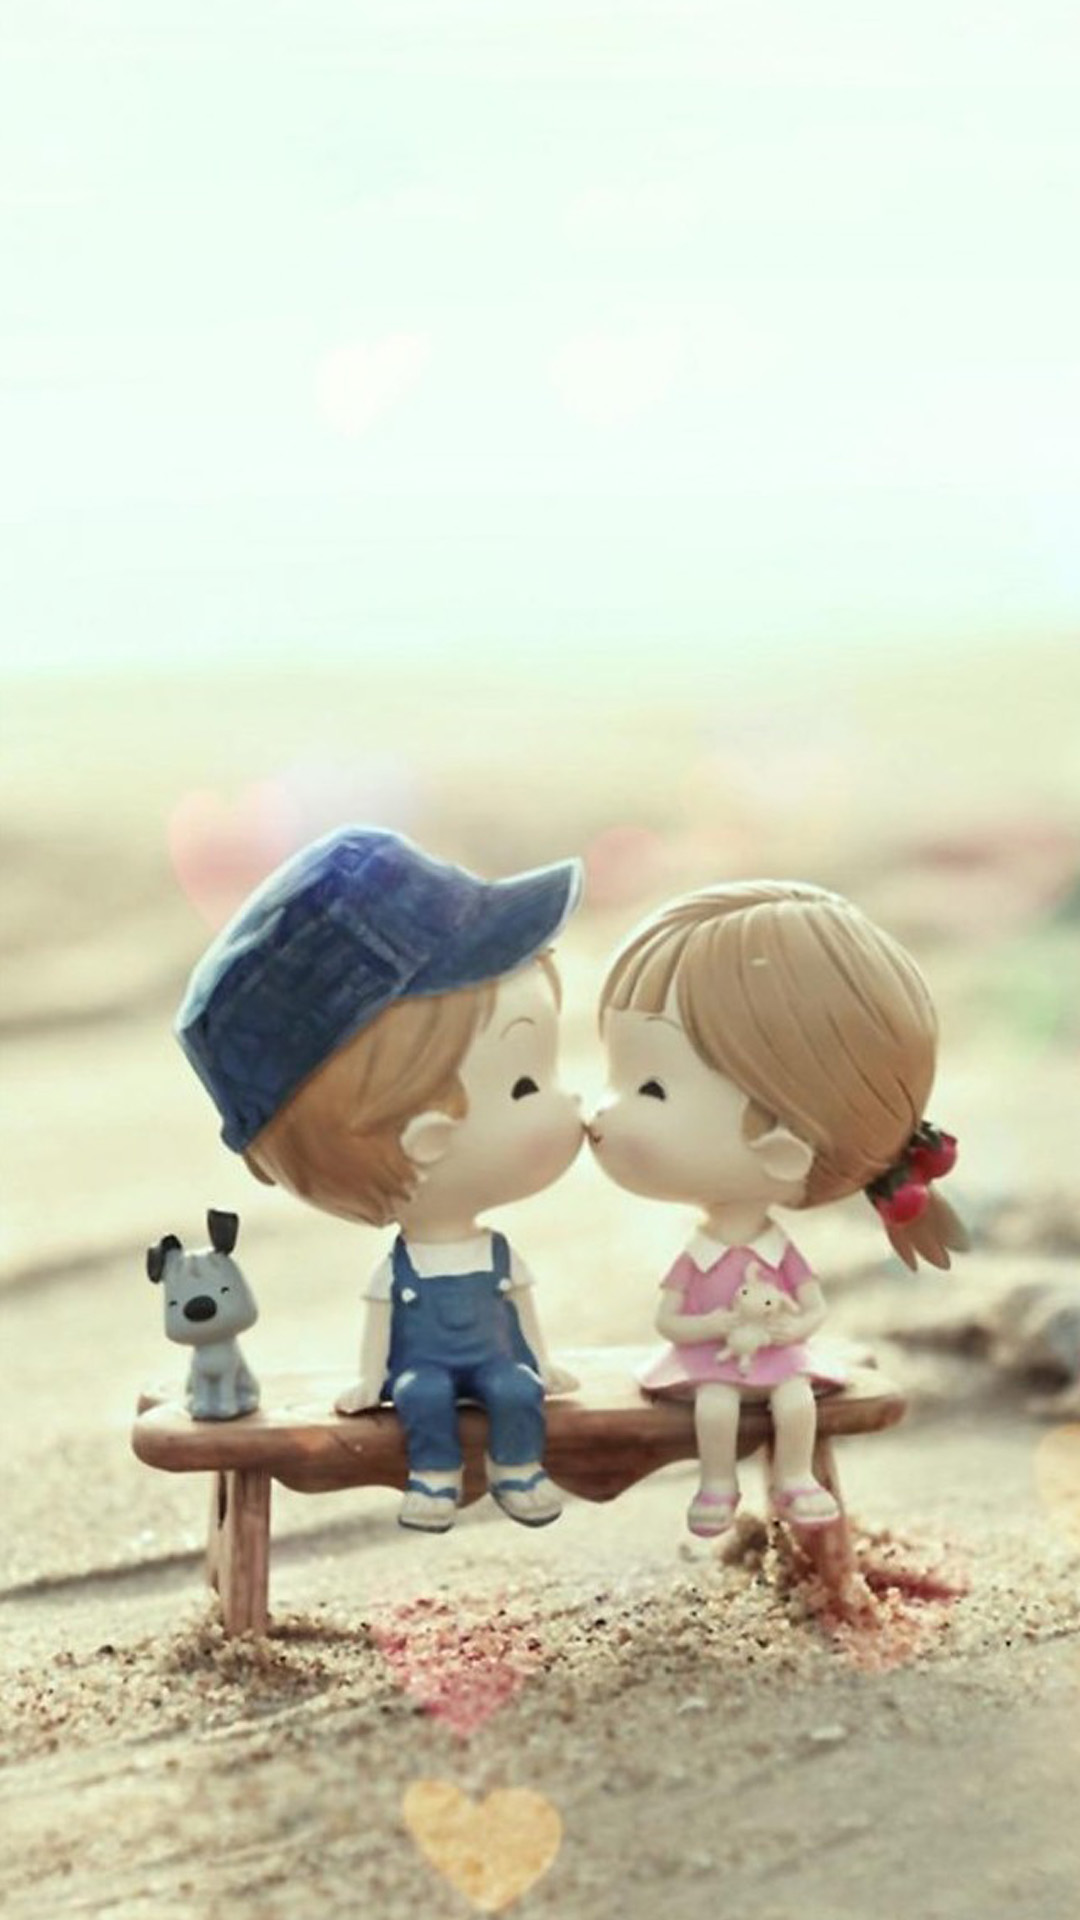 Cute Cartoon Kissing Couple iPhone 6 Wallpaper Download | iPhone ...